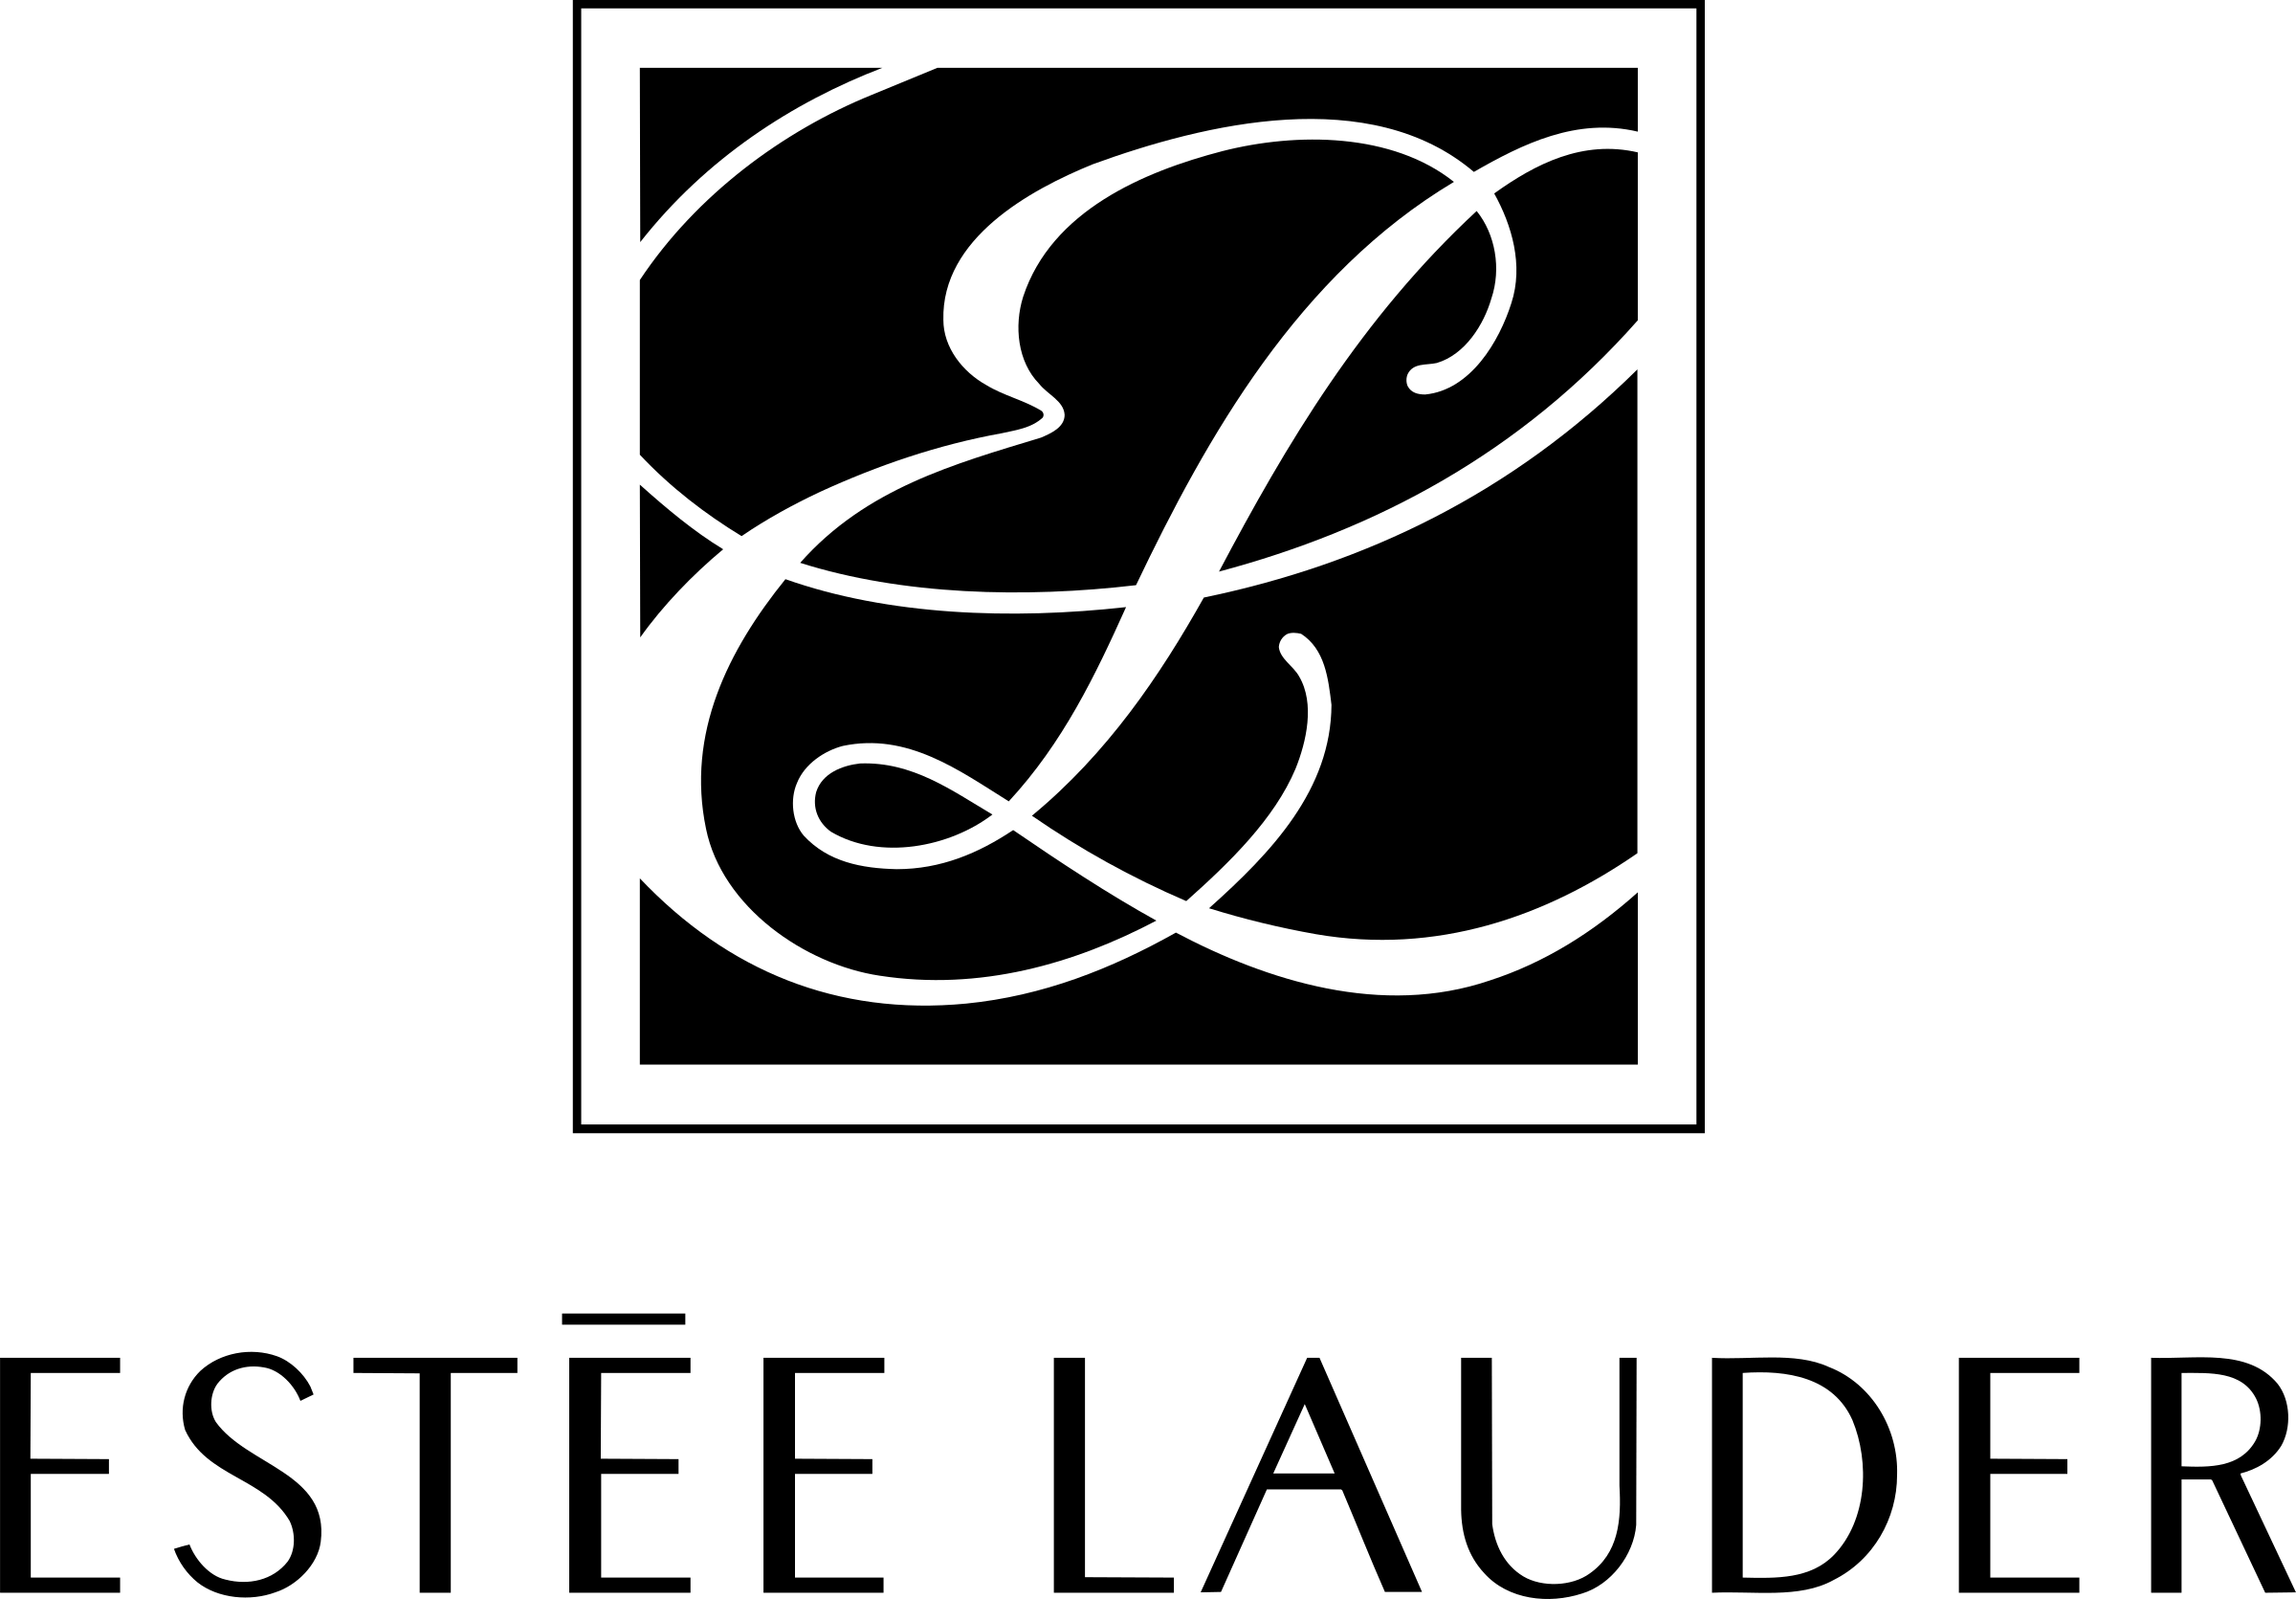 Lauder Logo - ESTEE LAUDER 2 Logo PNG Transparent & SVG Vector - Freebie Supply